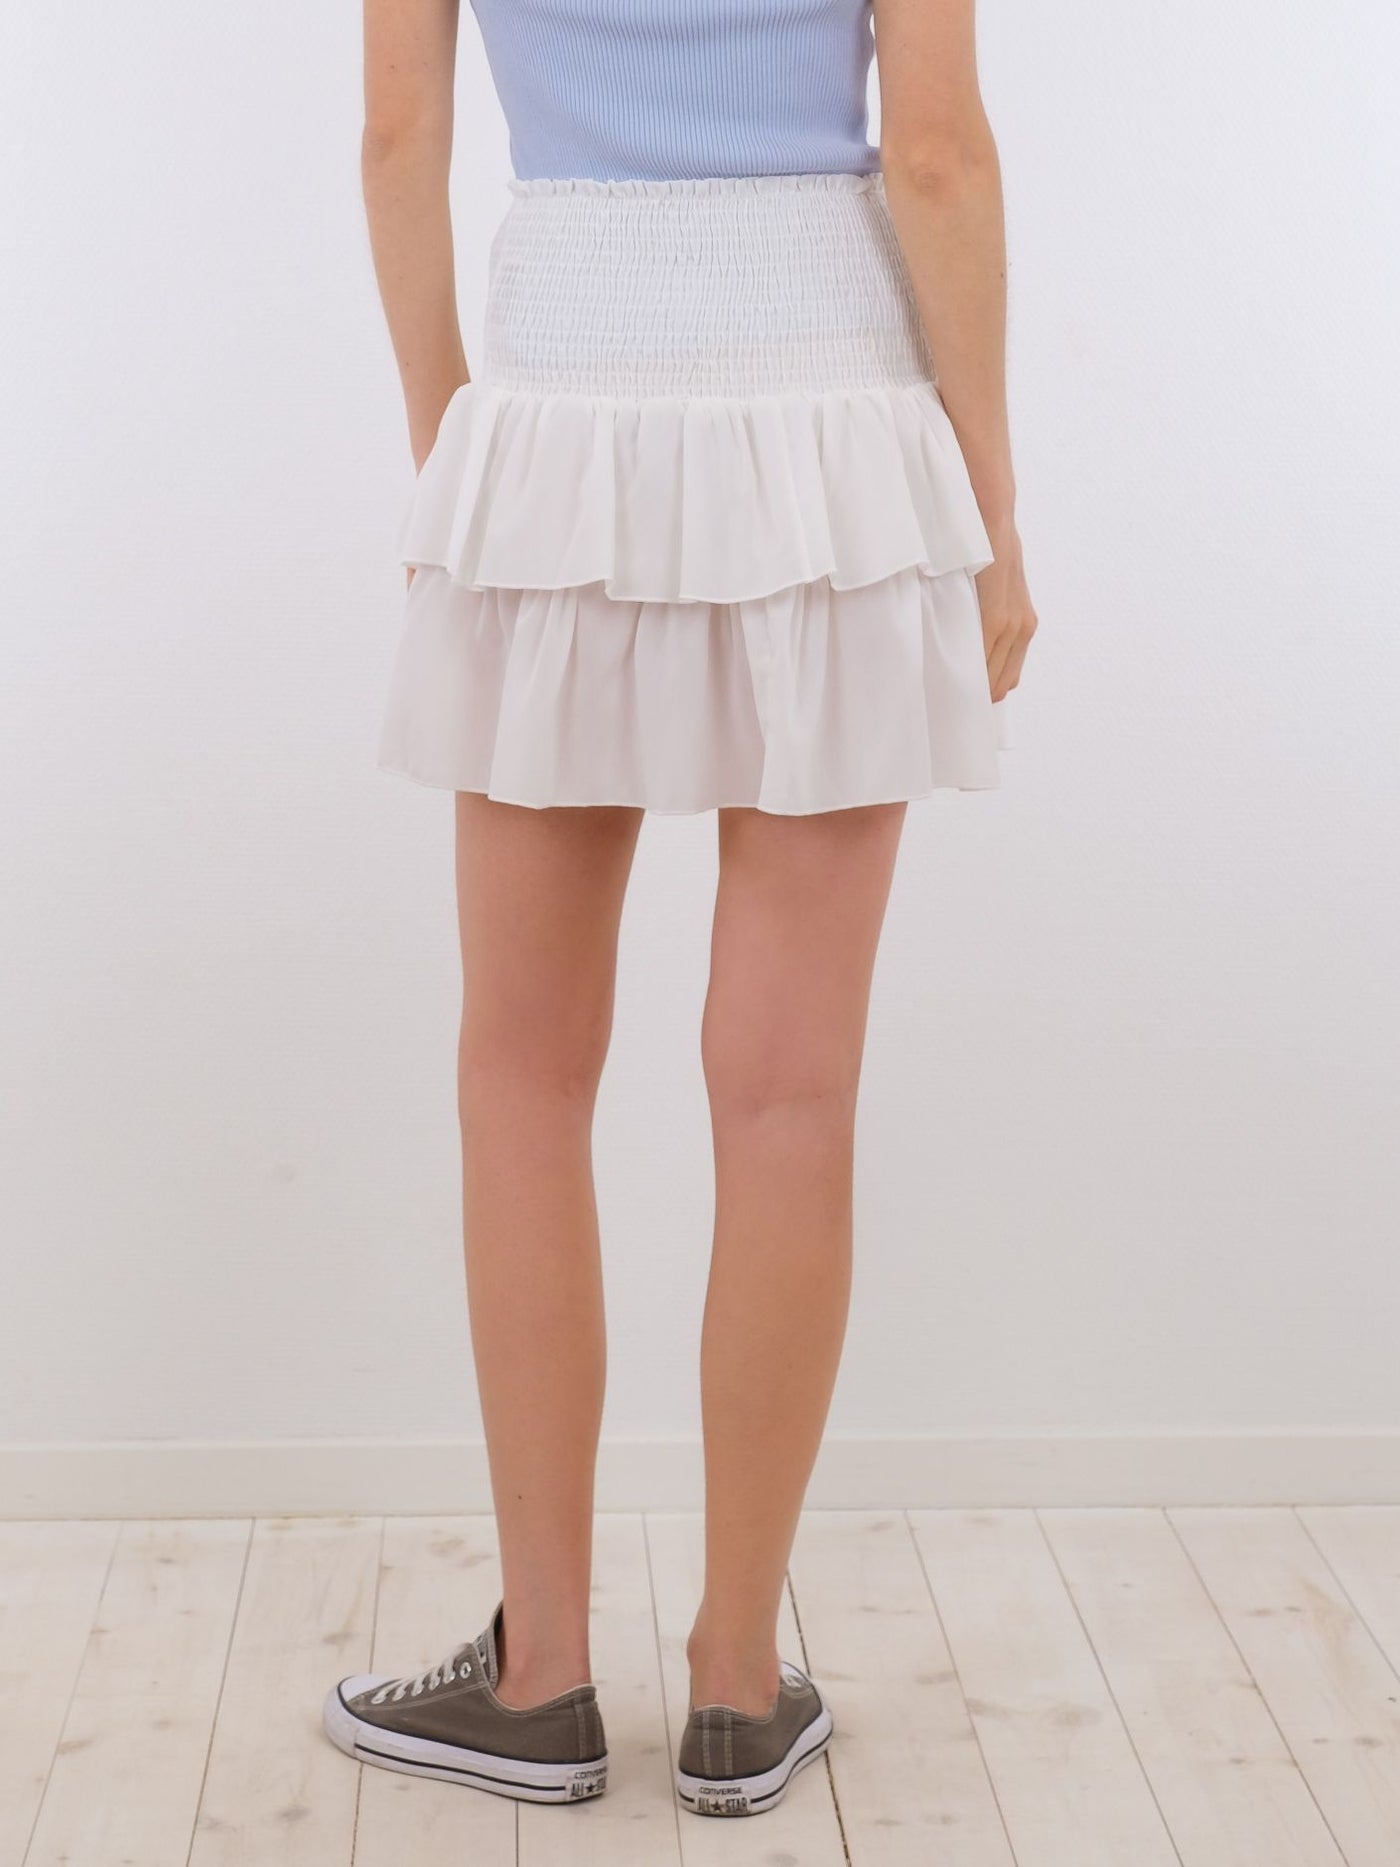 Carin R Skirt white